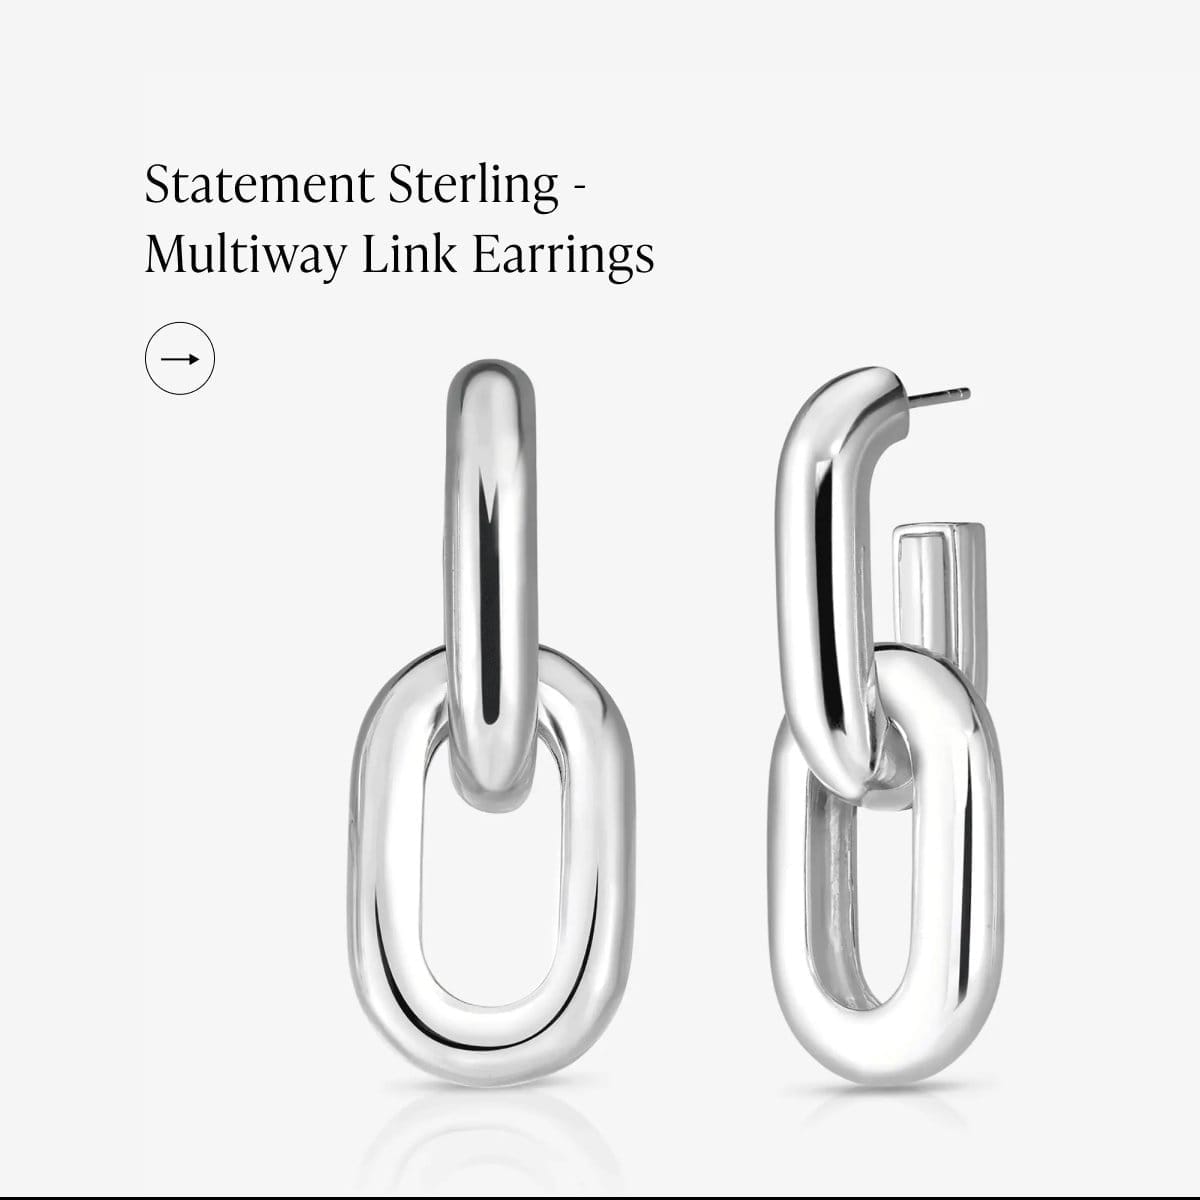 State Sterling - Multiway Link Earrings